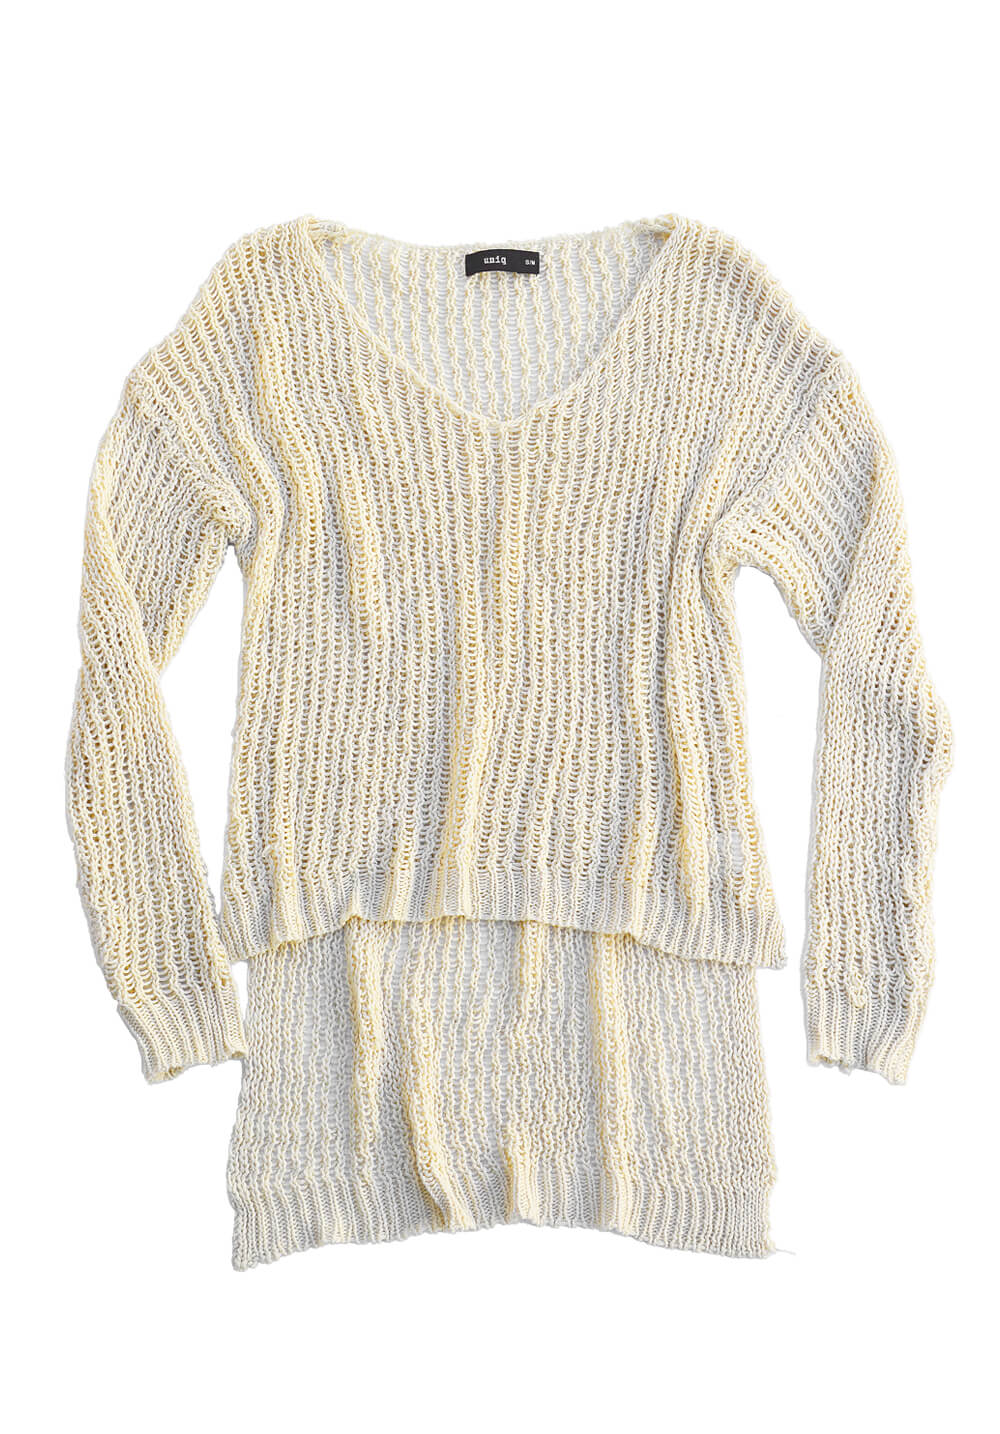 open knit sweater - cream - size s/m